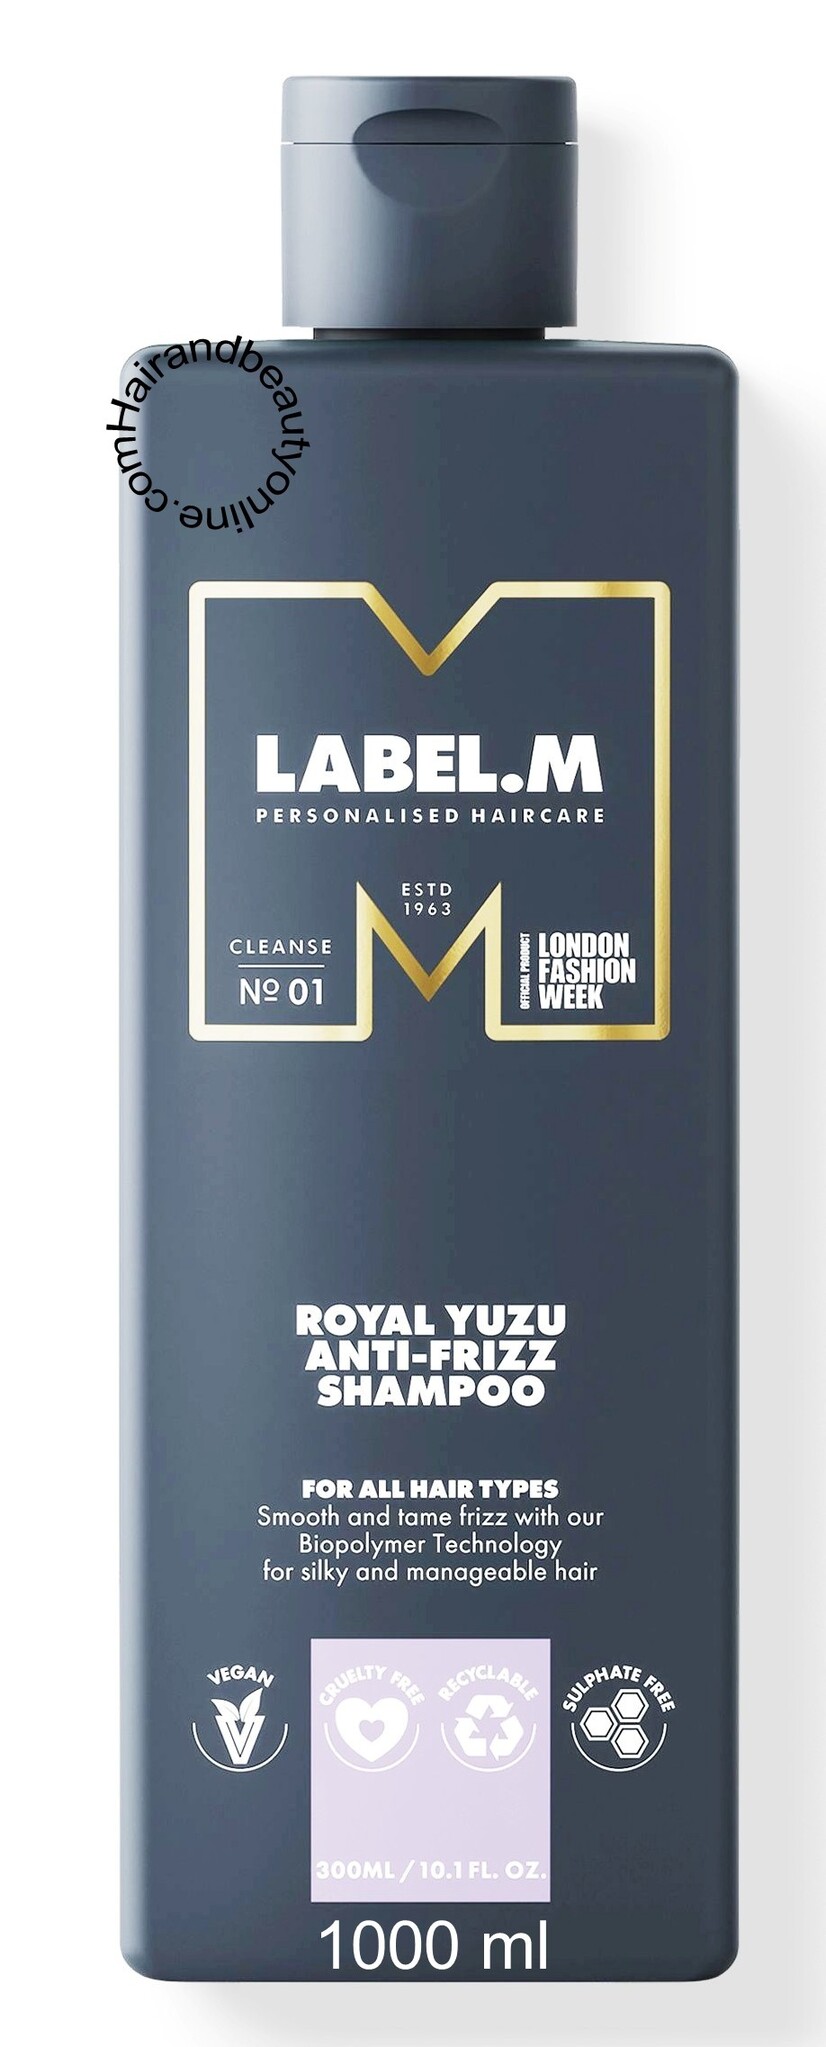 Label.m Royal Yuzu Anti-Frizz Shampoo 1000ml